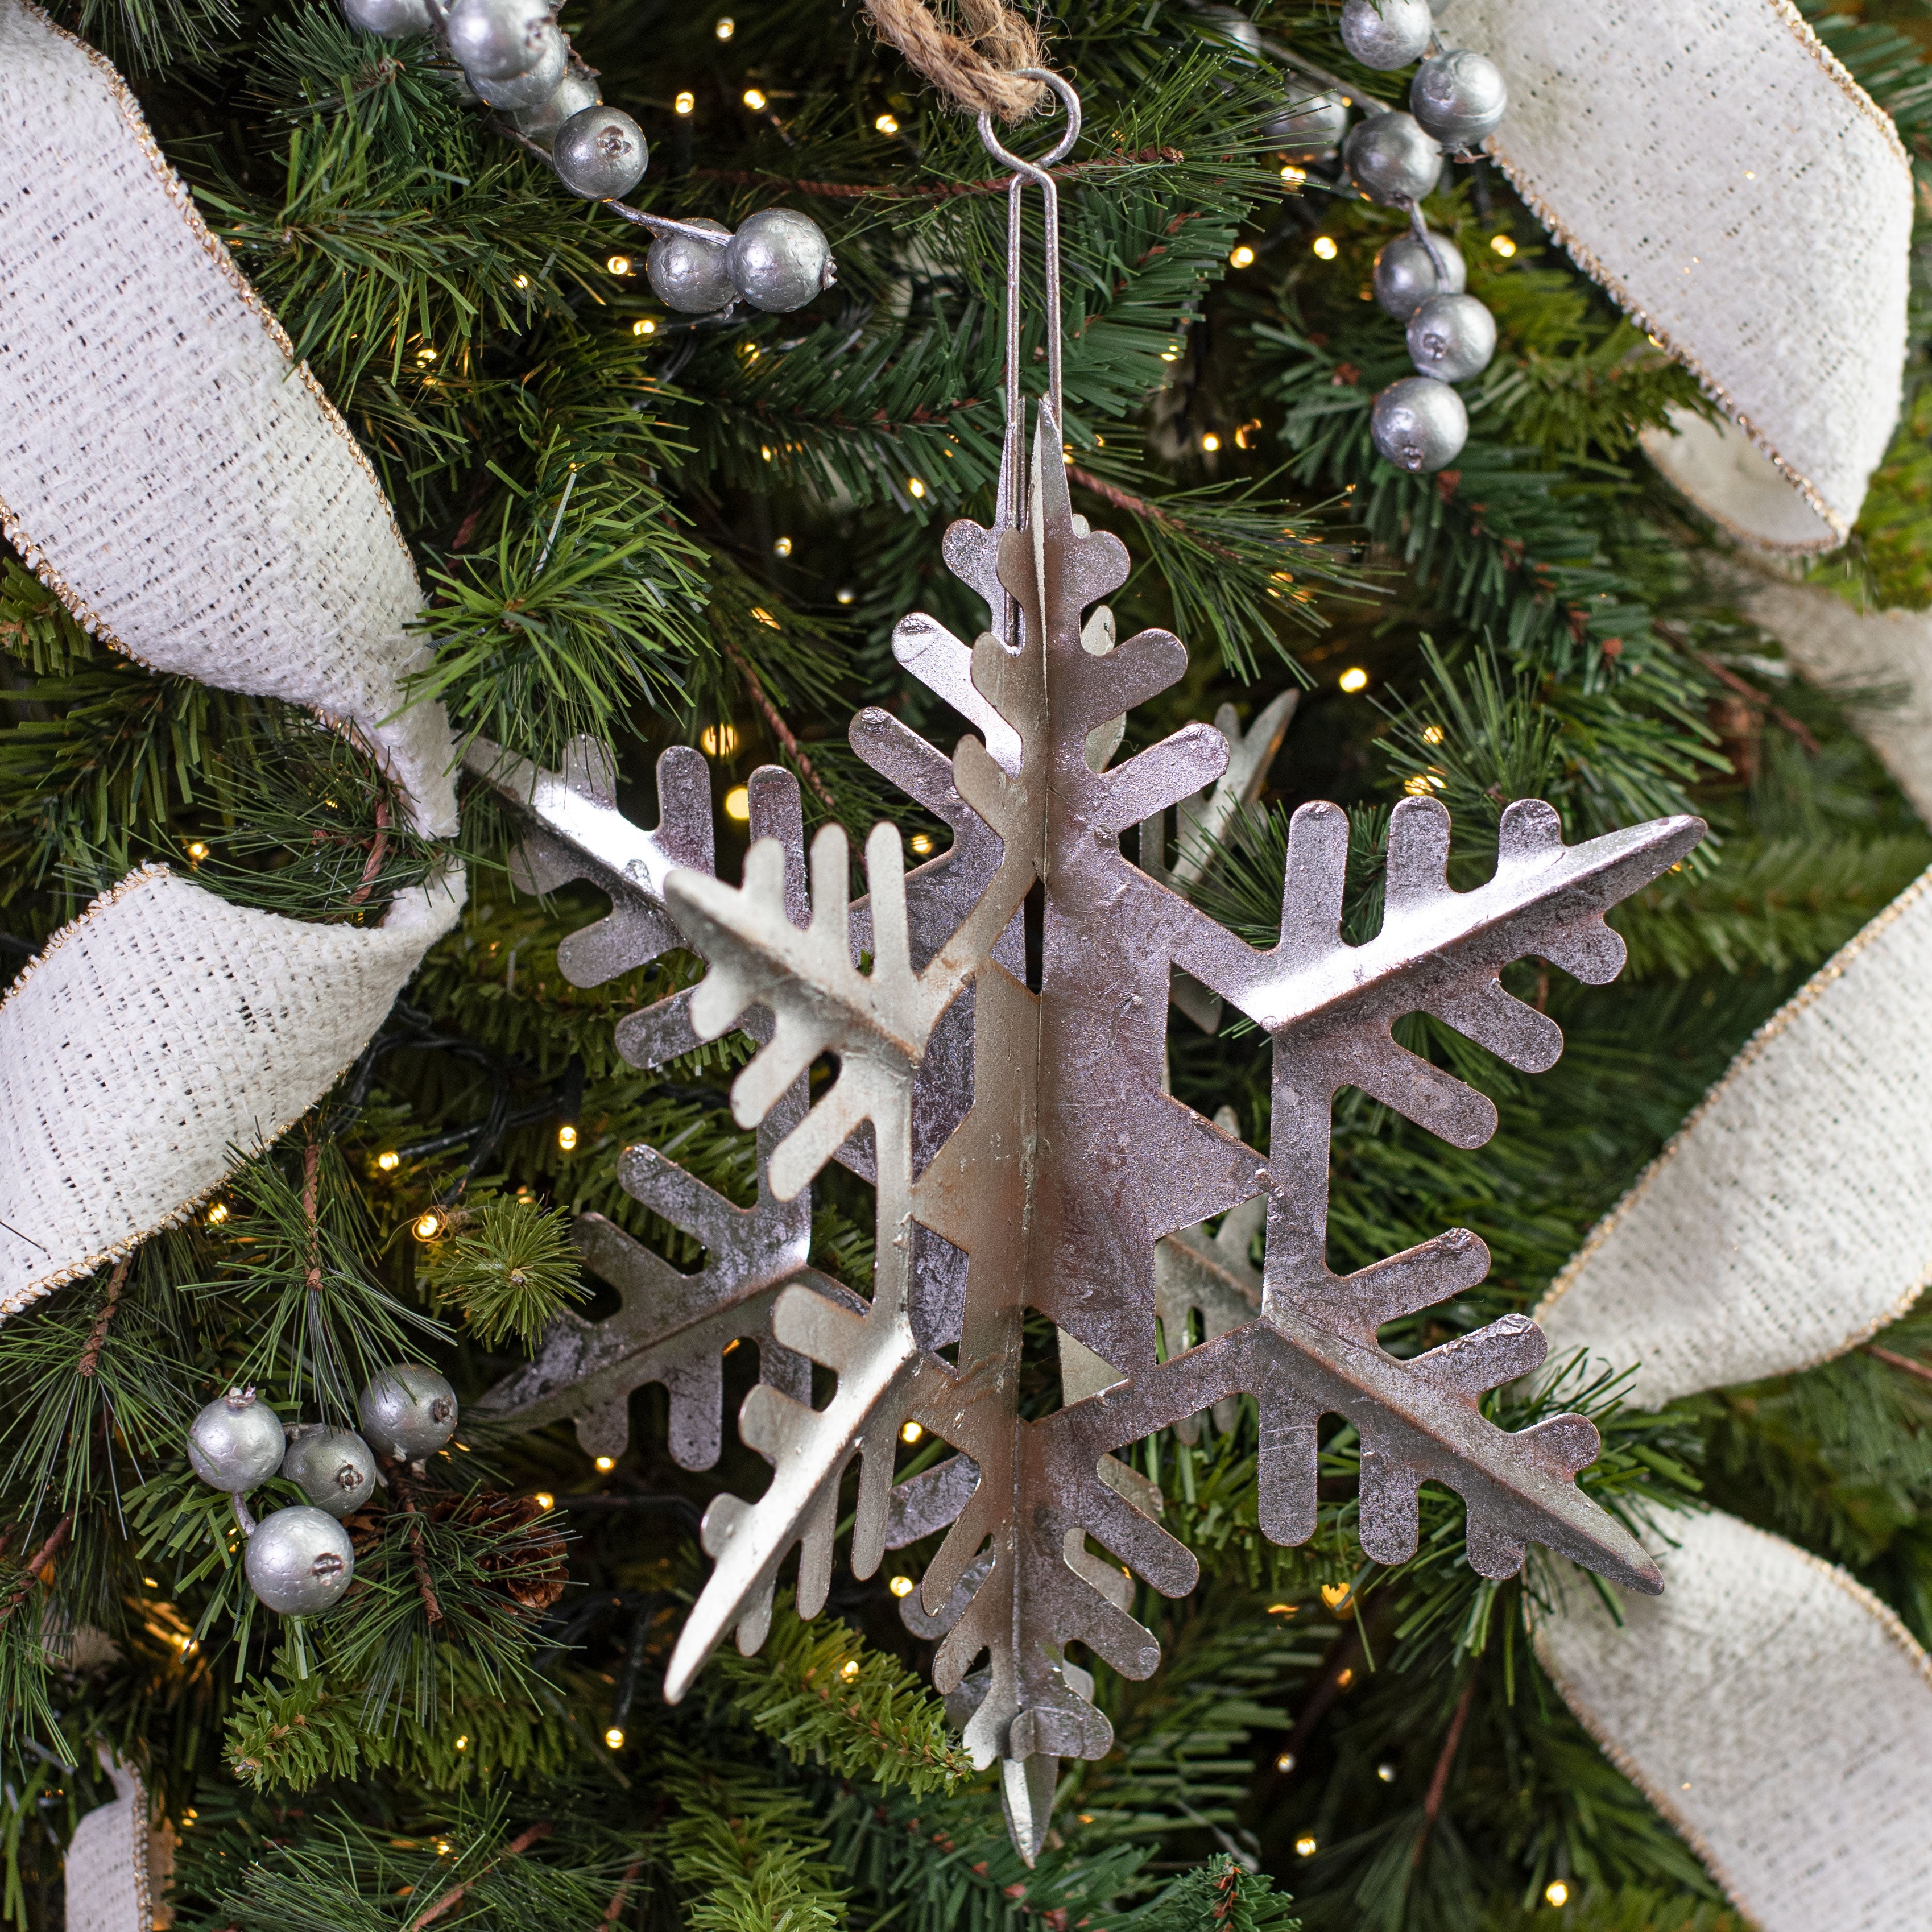 10" Metal 3D Snowflake Ornament: Antique Silver Leaf